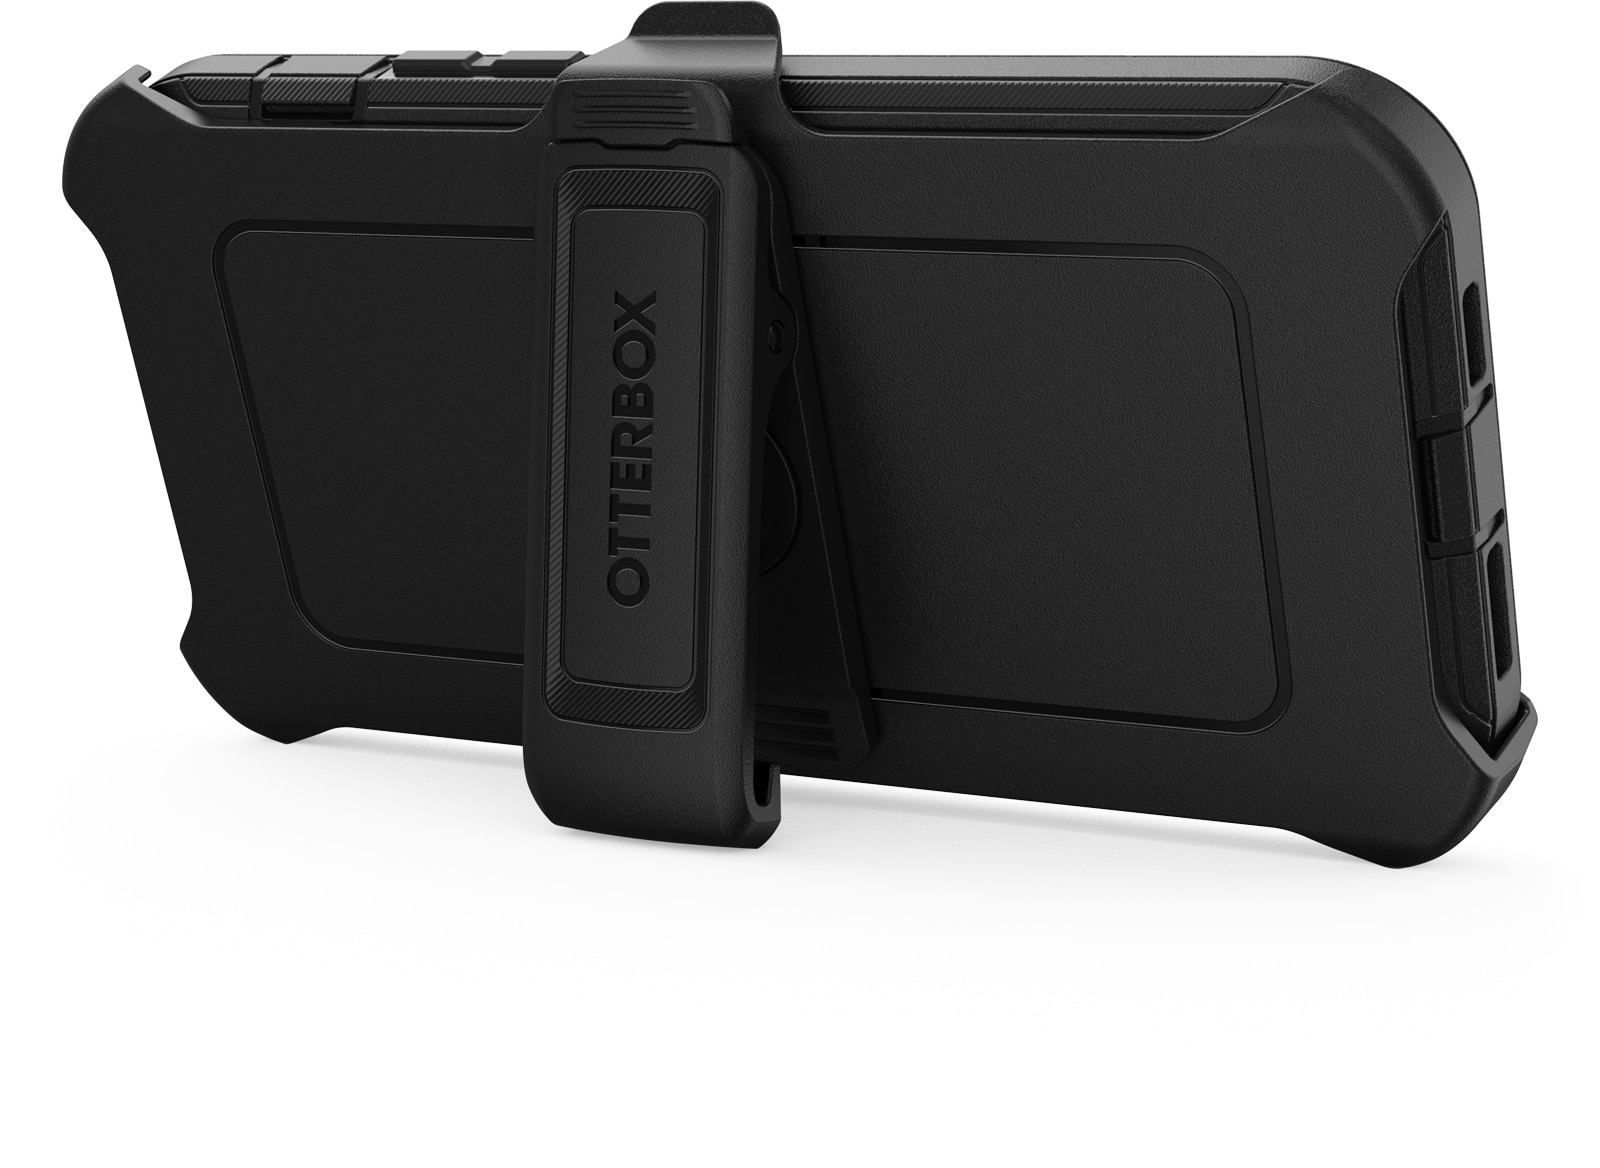 Cover Defender iPhone 14 Pro Black